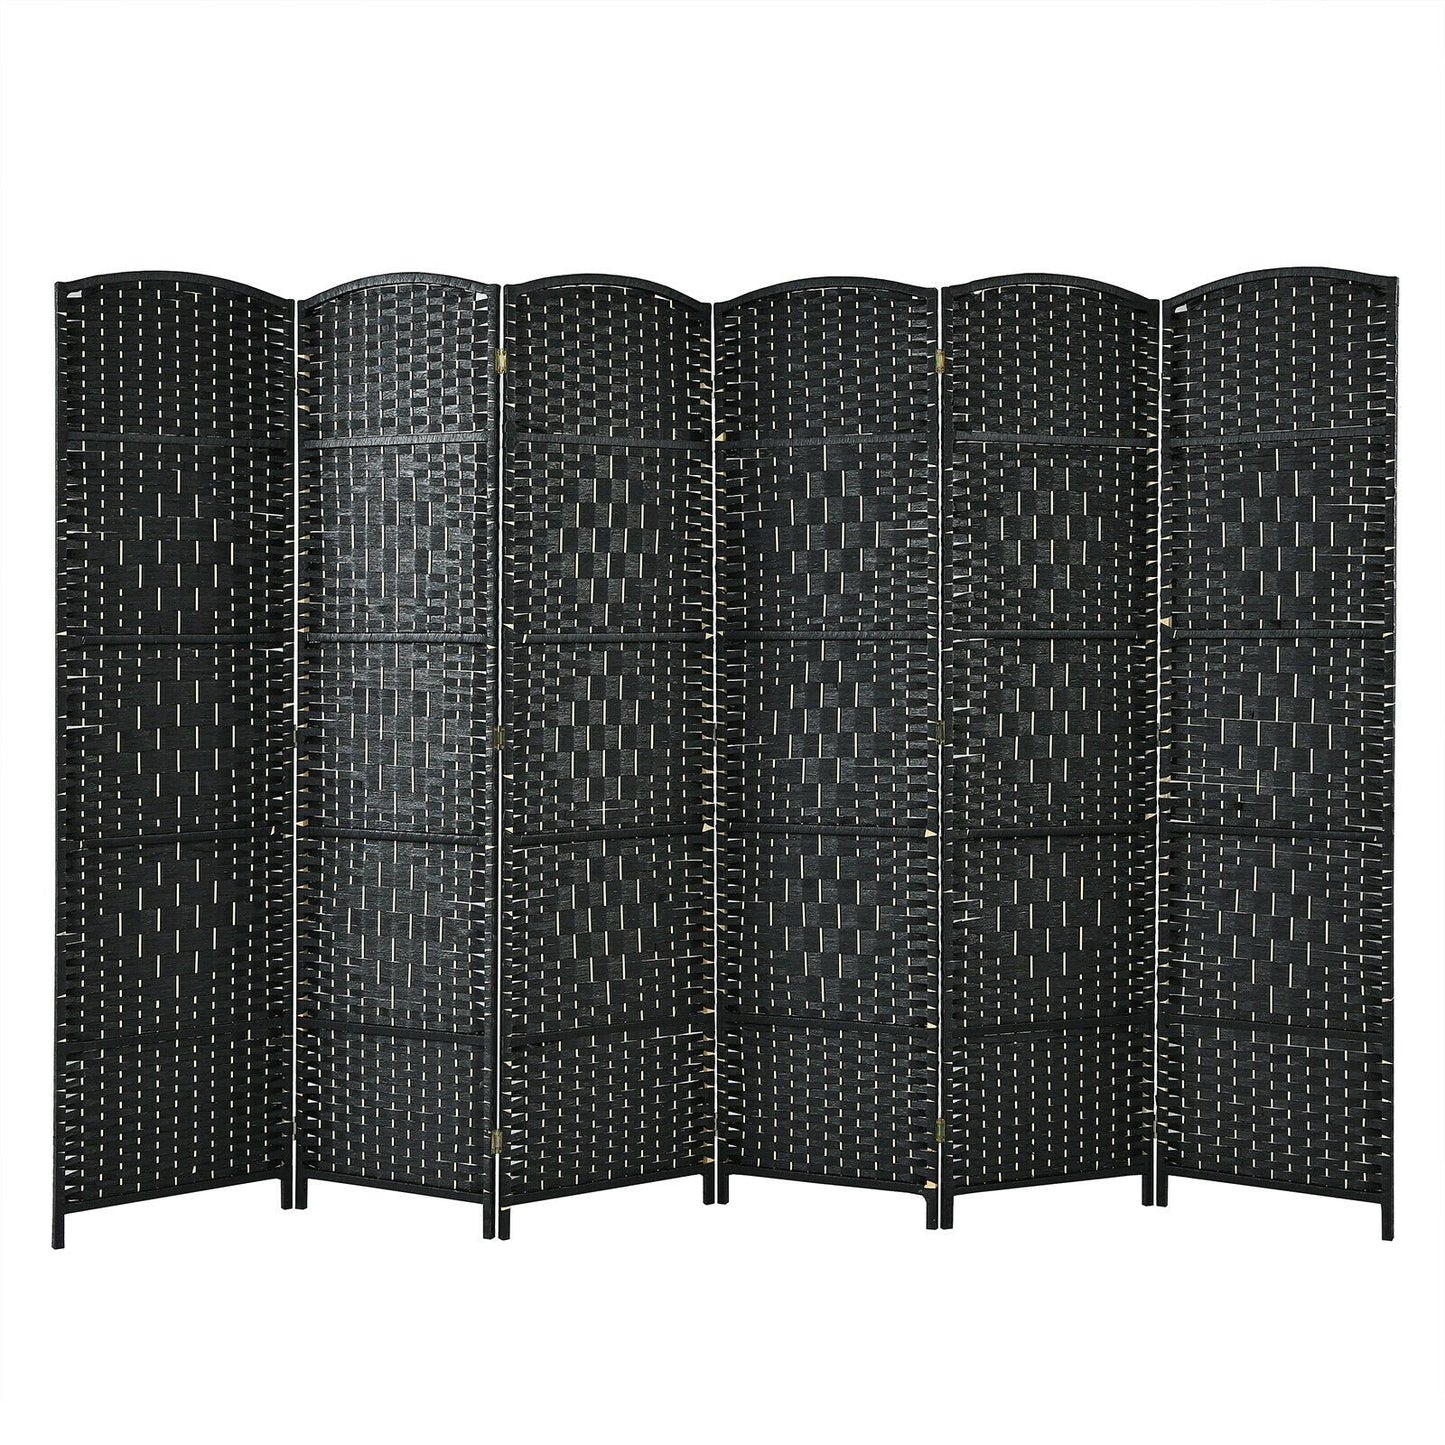 6.5Ft 6-Panel Weave Folding Fiber Room Divider Screen, Black at Gallery Canada